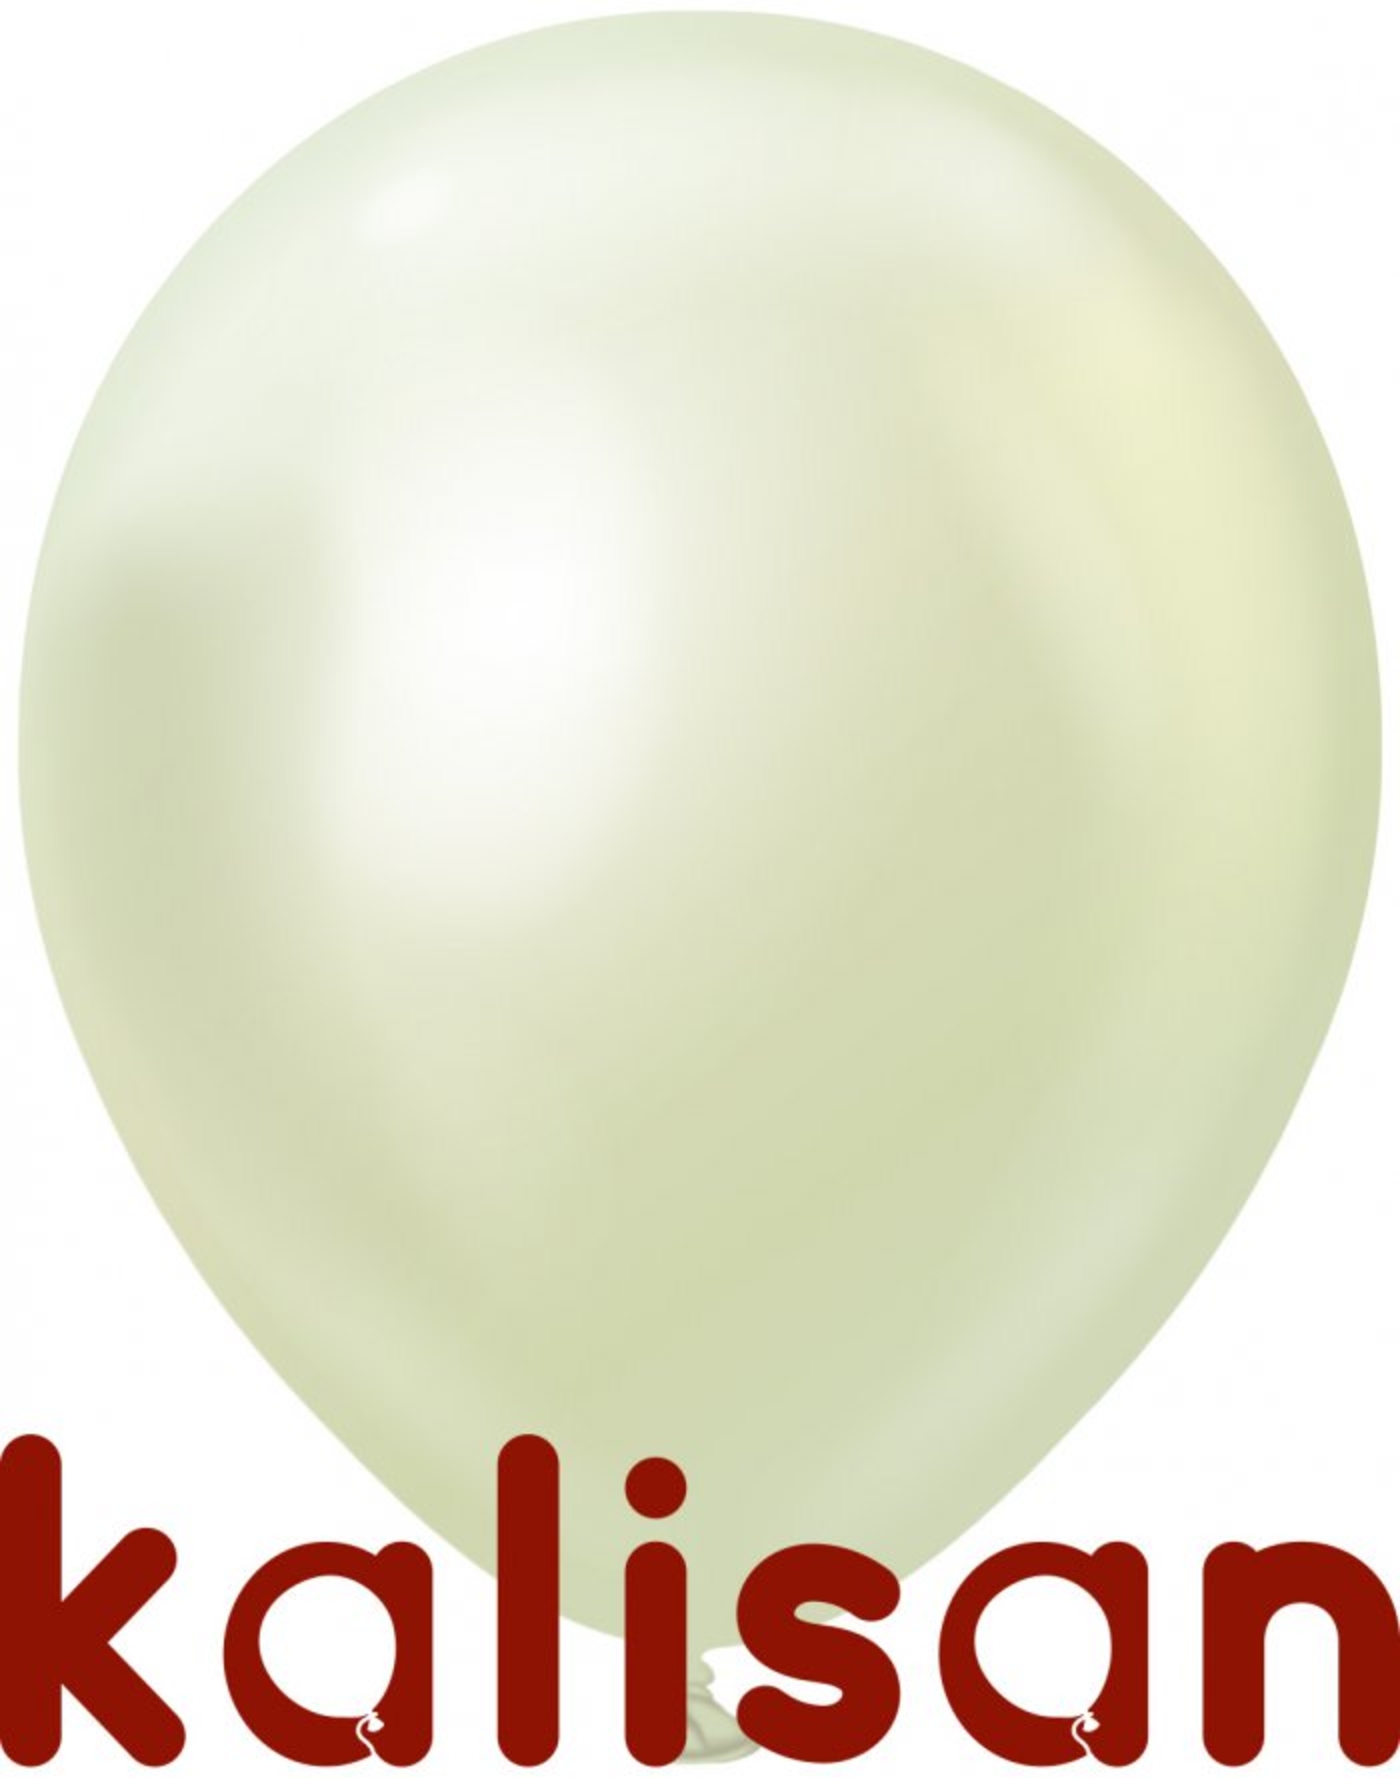 helium balloon - chrome - gold green